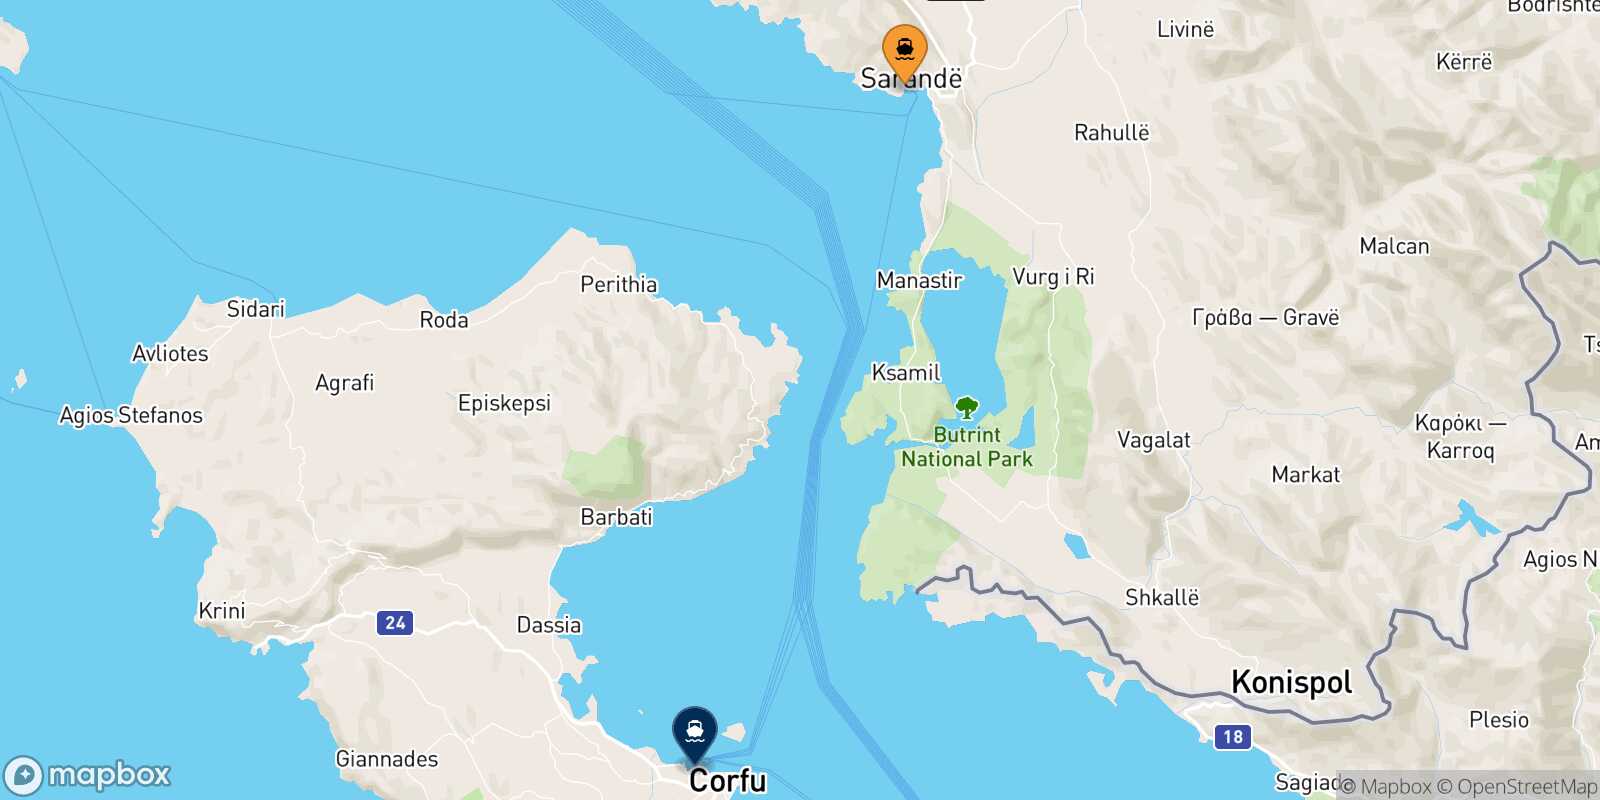 Saranda Corfu route map